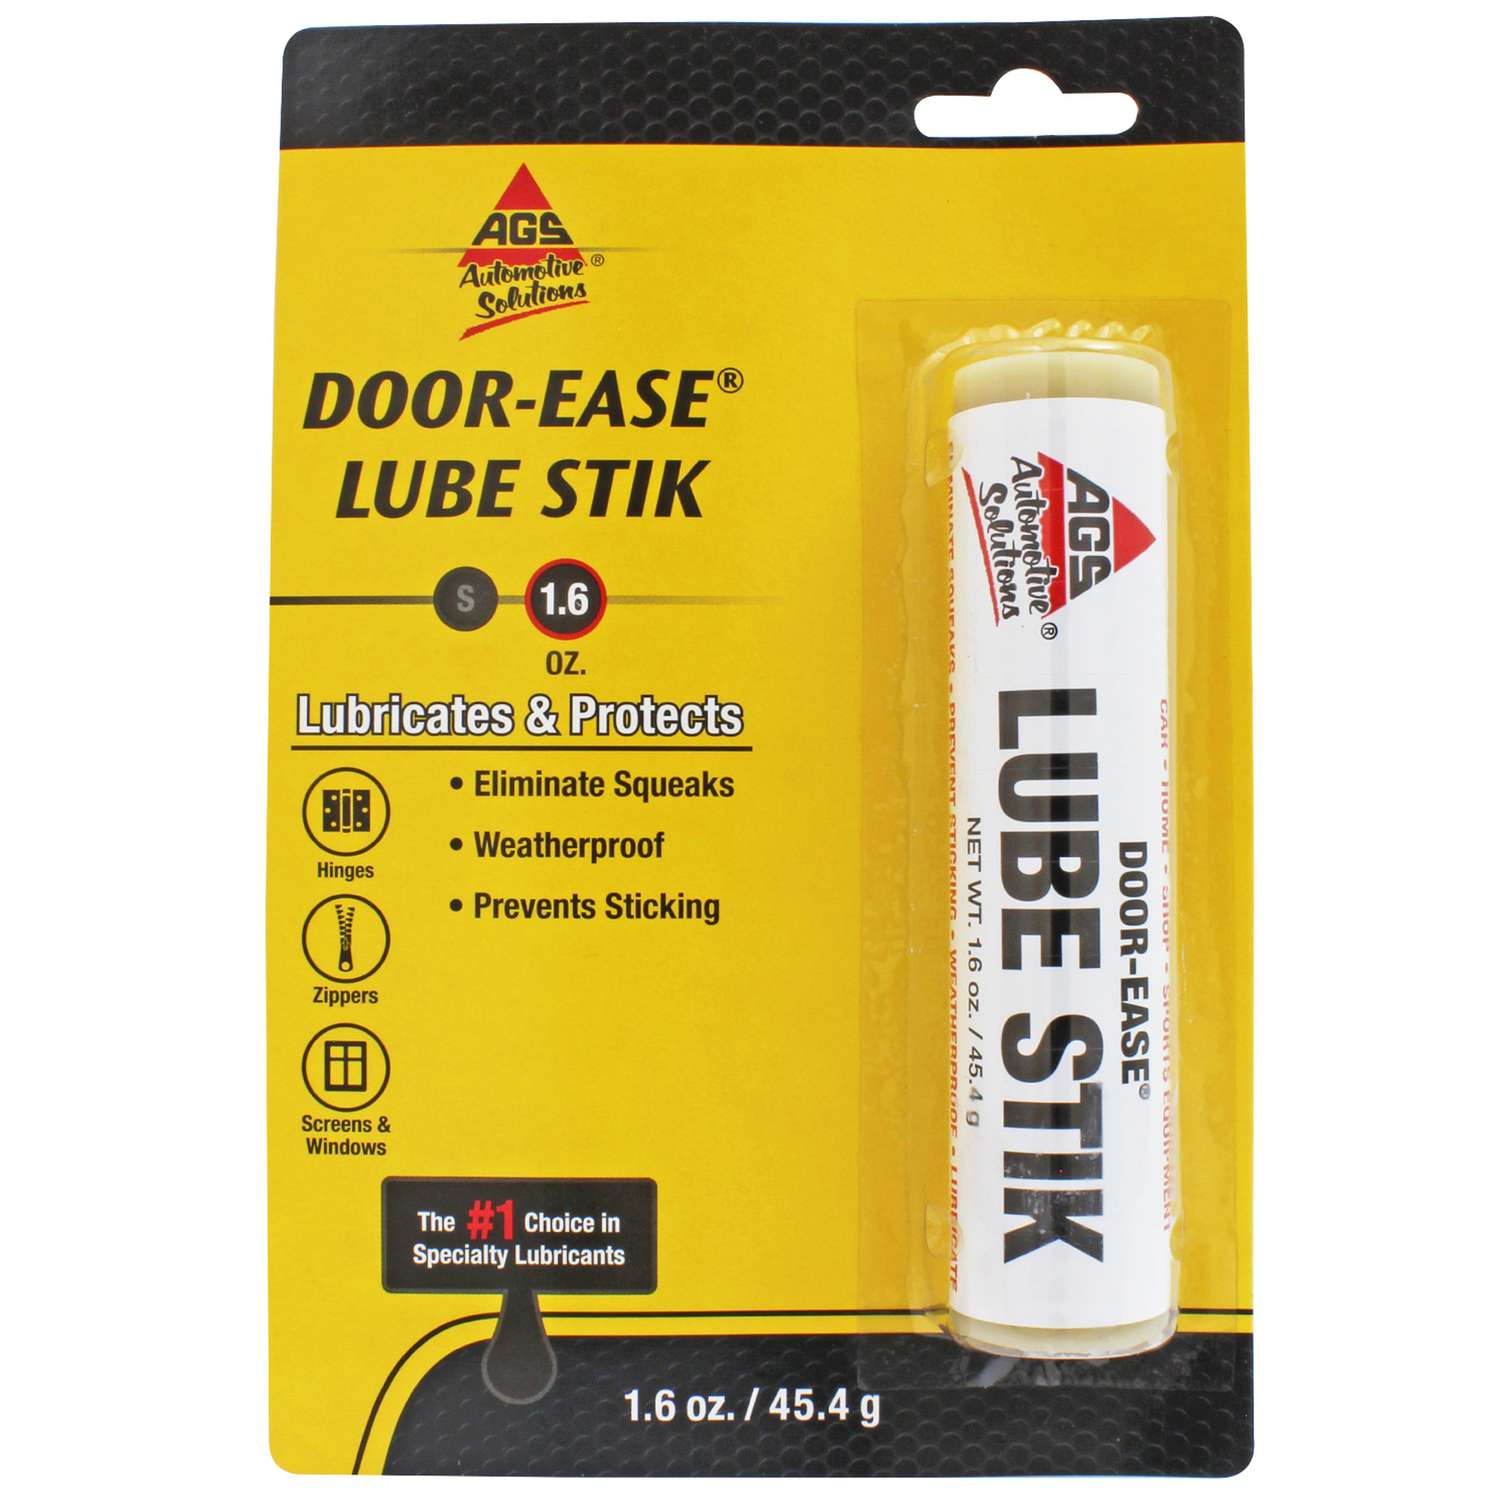 Zipper Ease Lubricant (Box of 24 sticks)